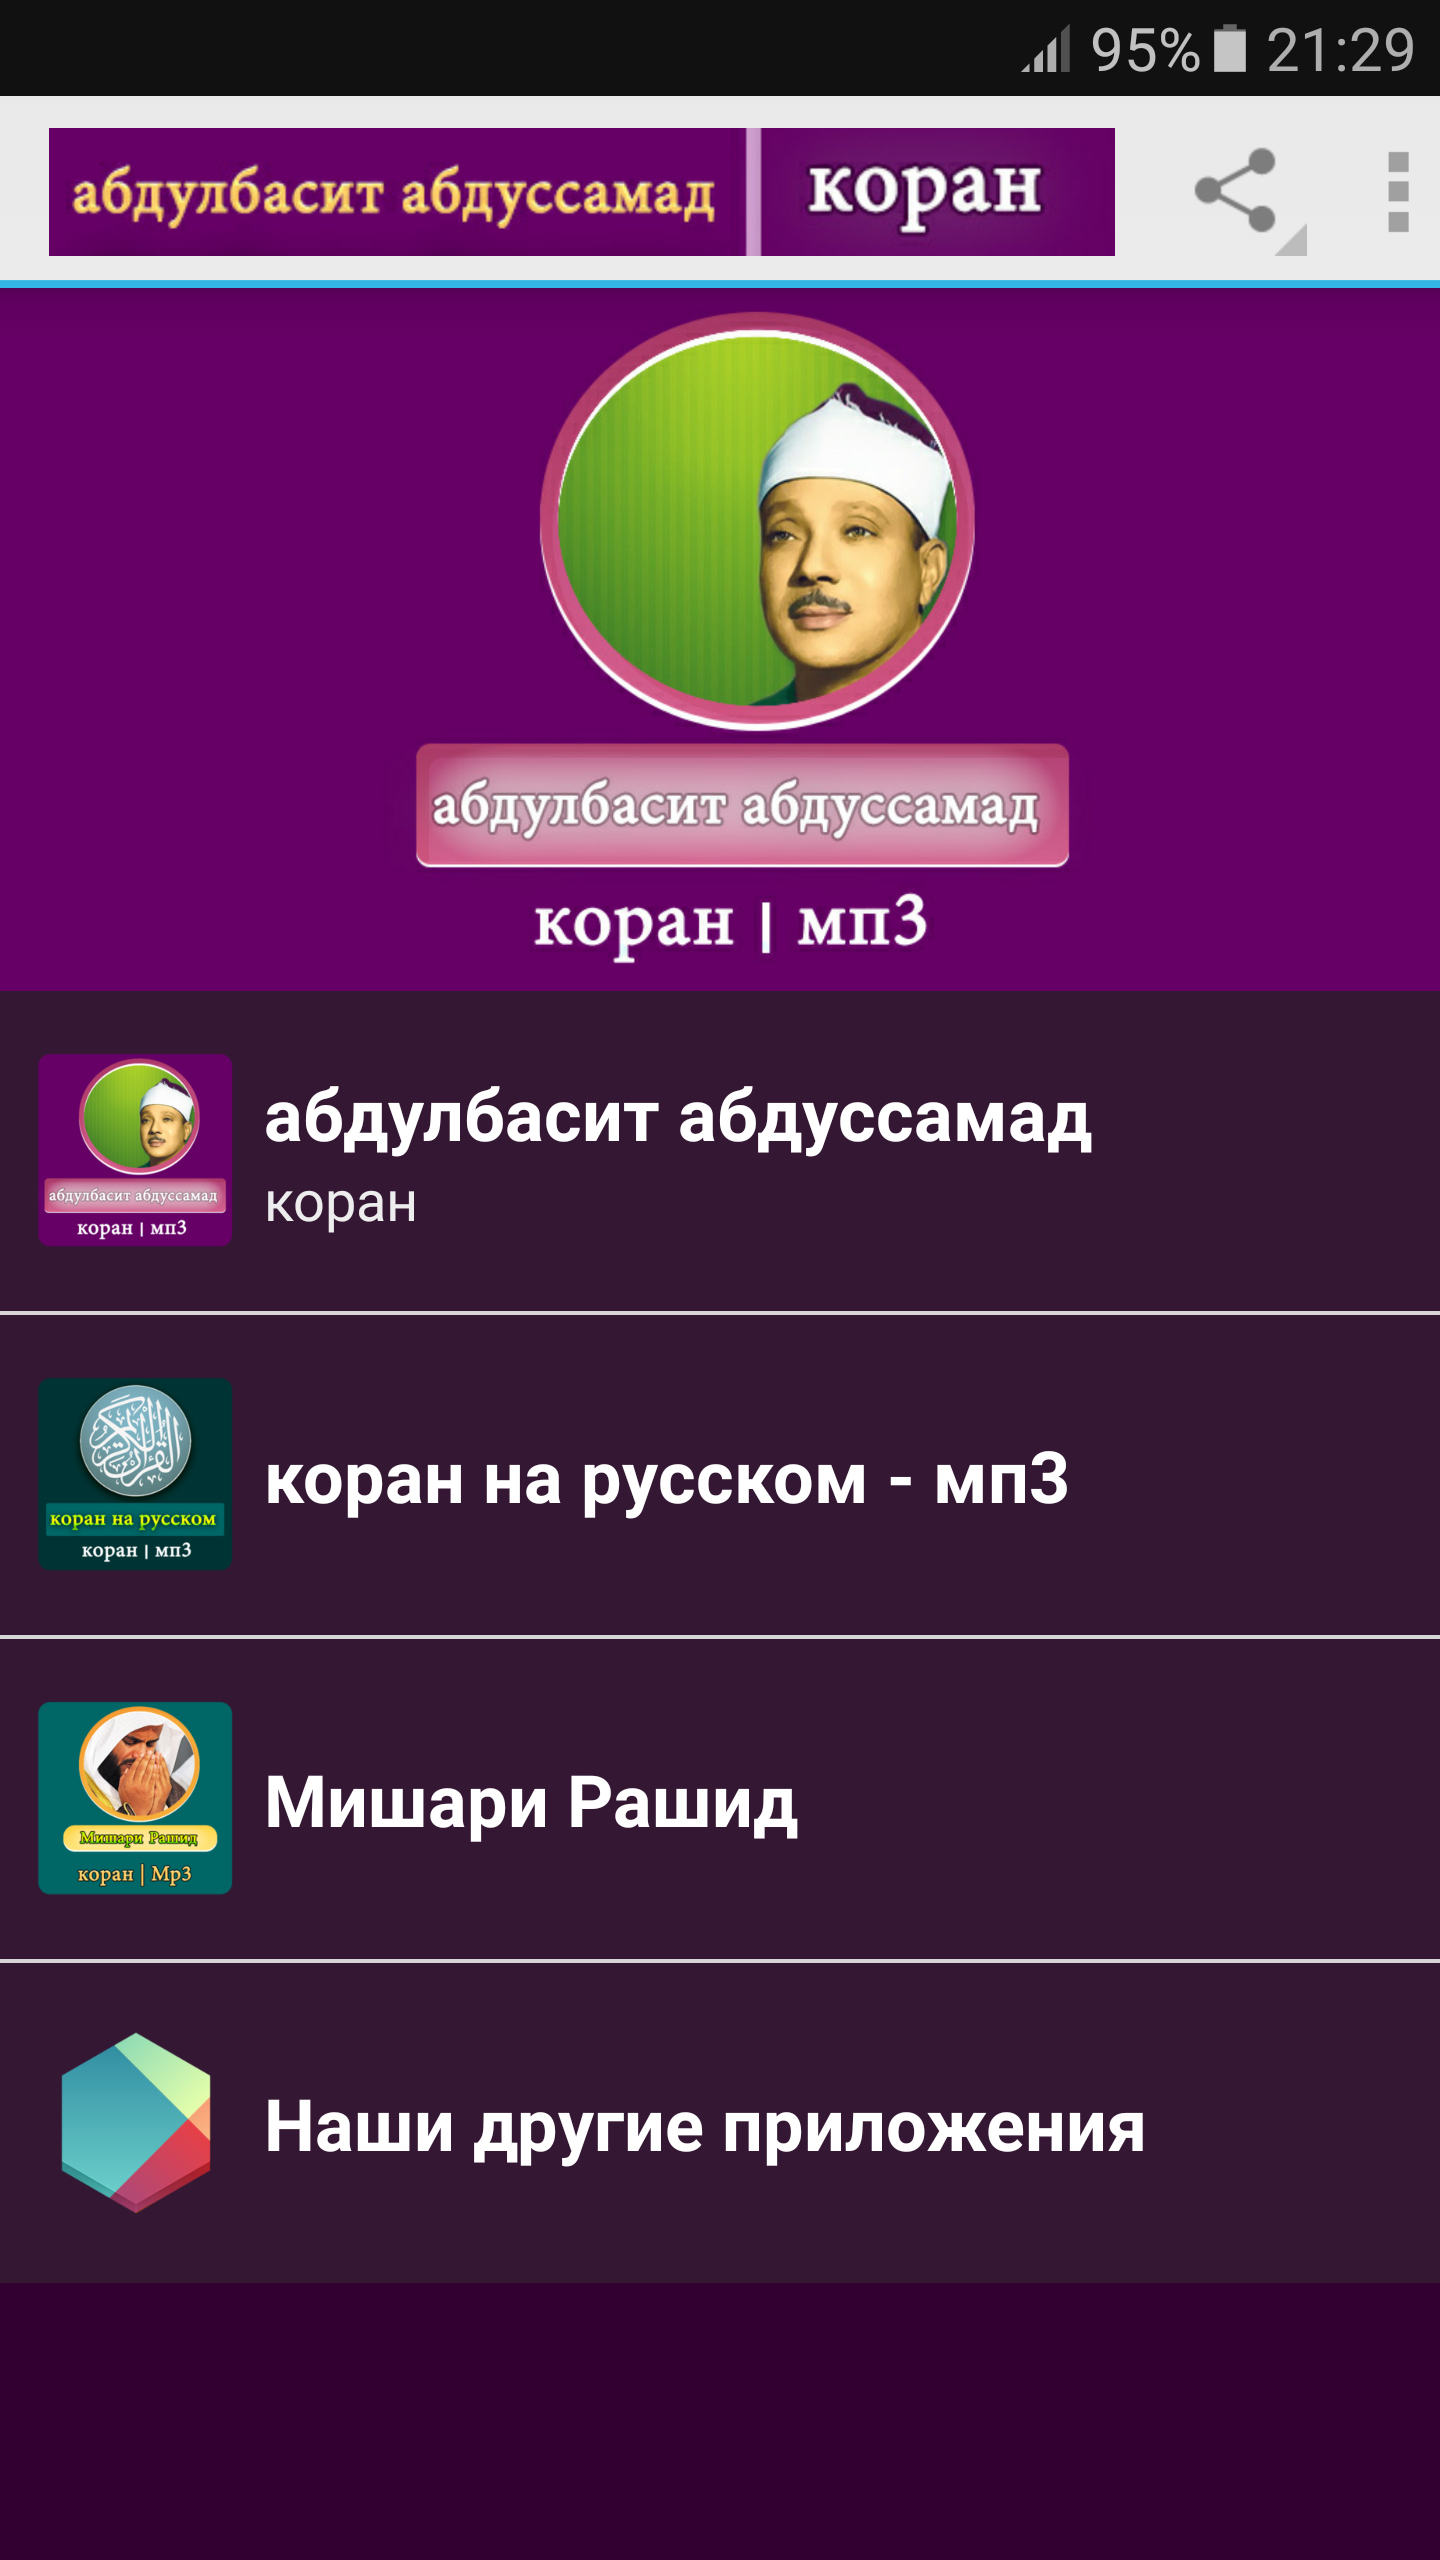 Android application абдулбасит абдуссамад - корана screenshort